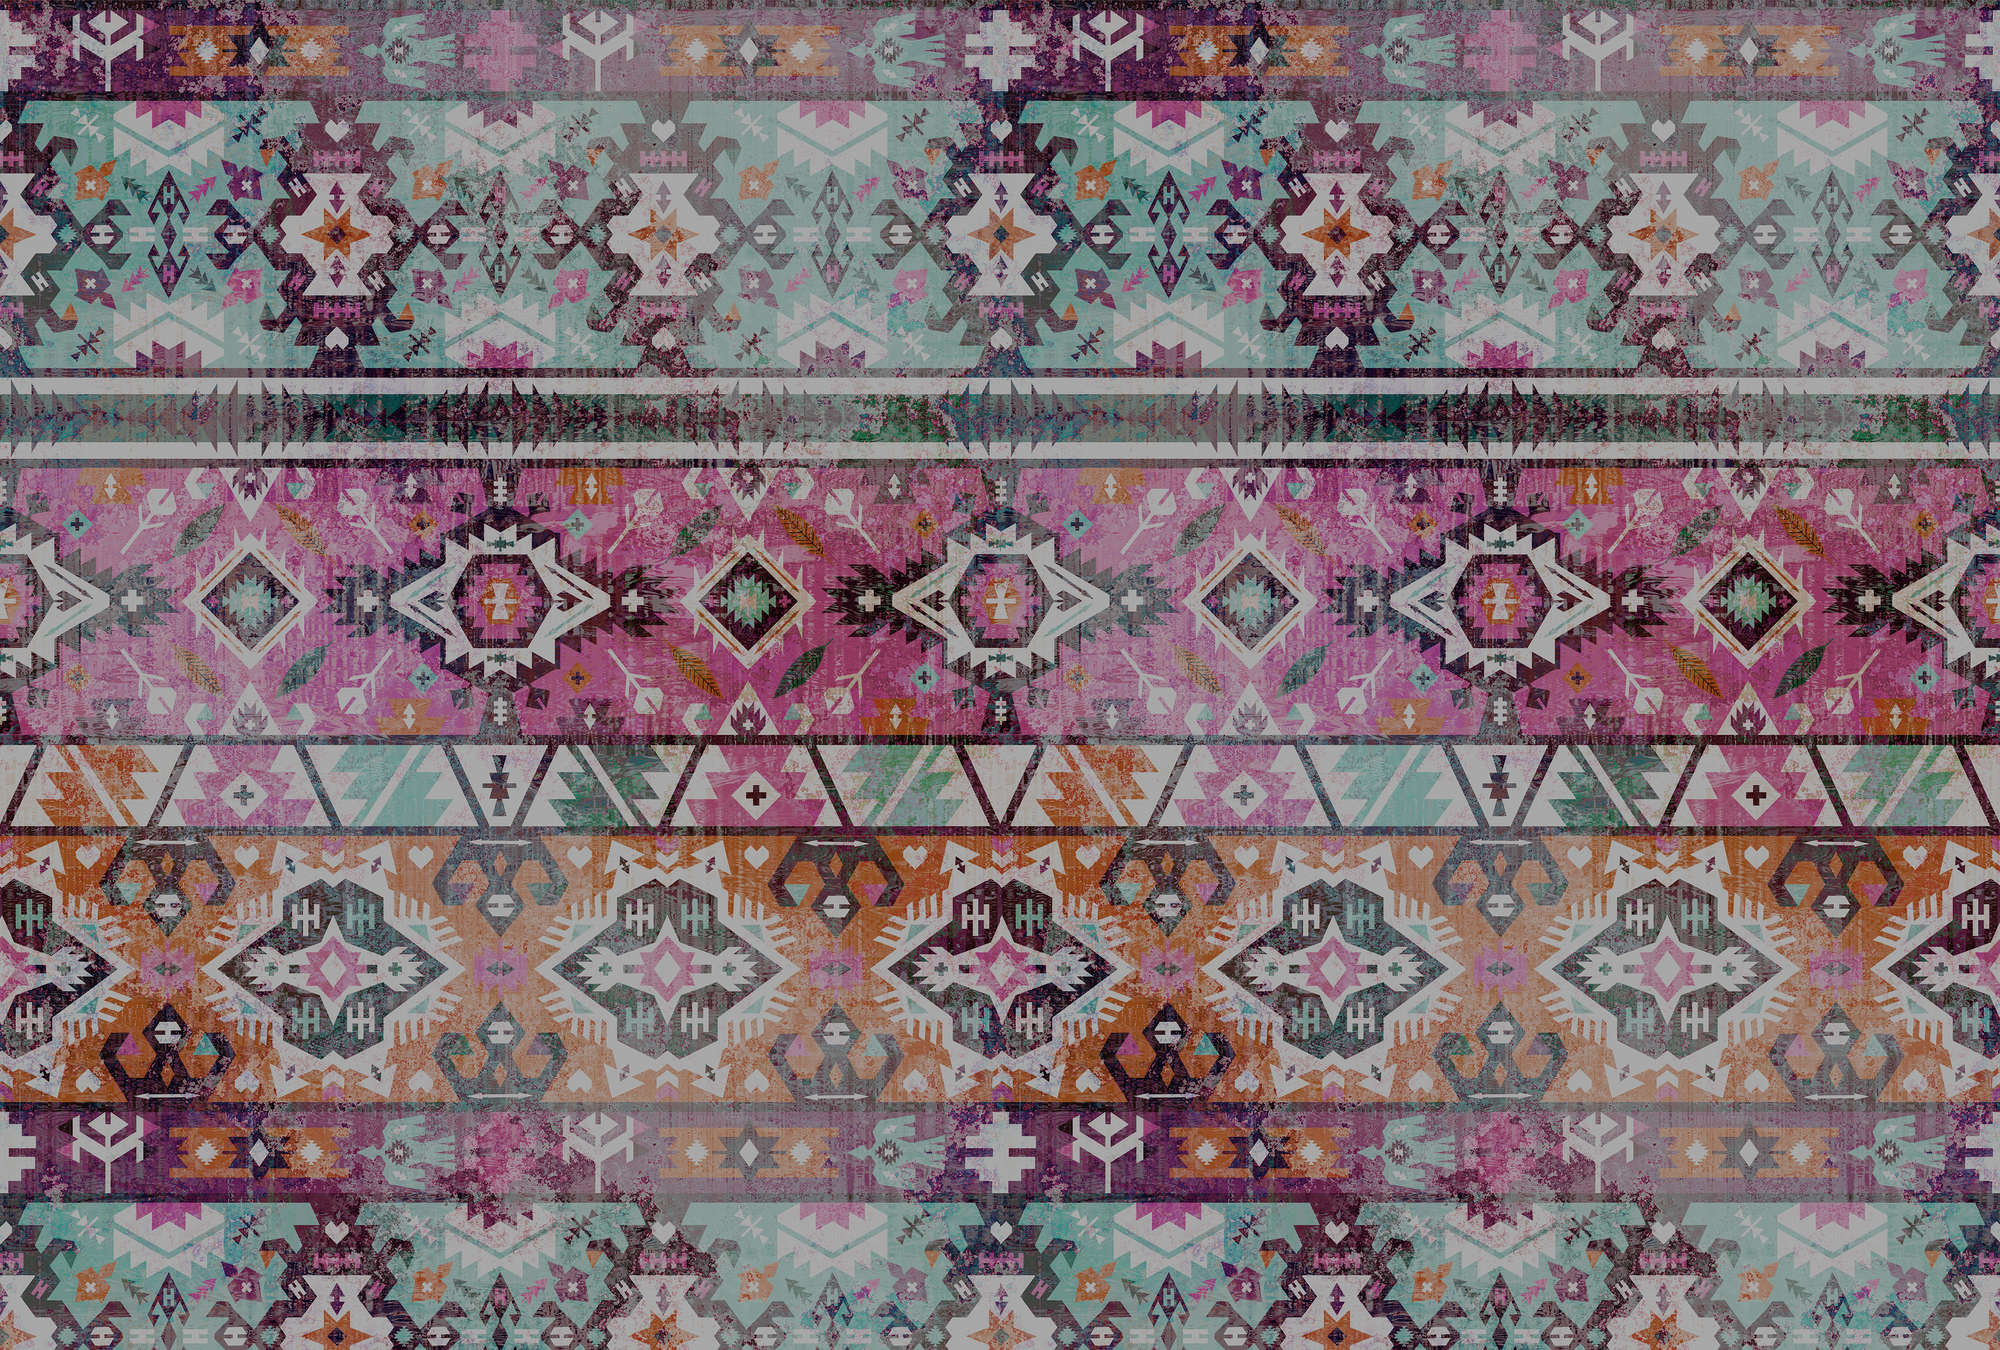             Muurschildering etnisch textielpatroon, geometrisch - Roze, Blauw
        